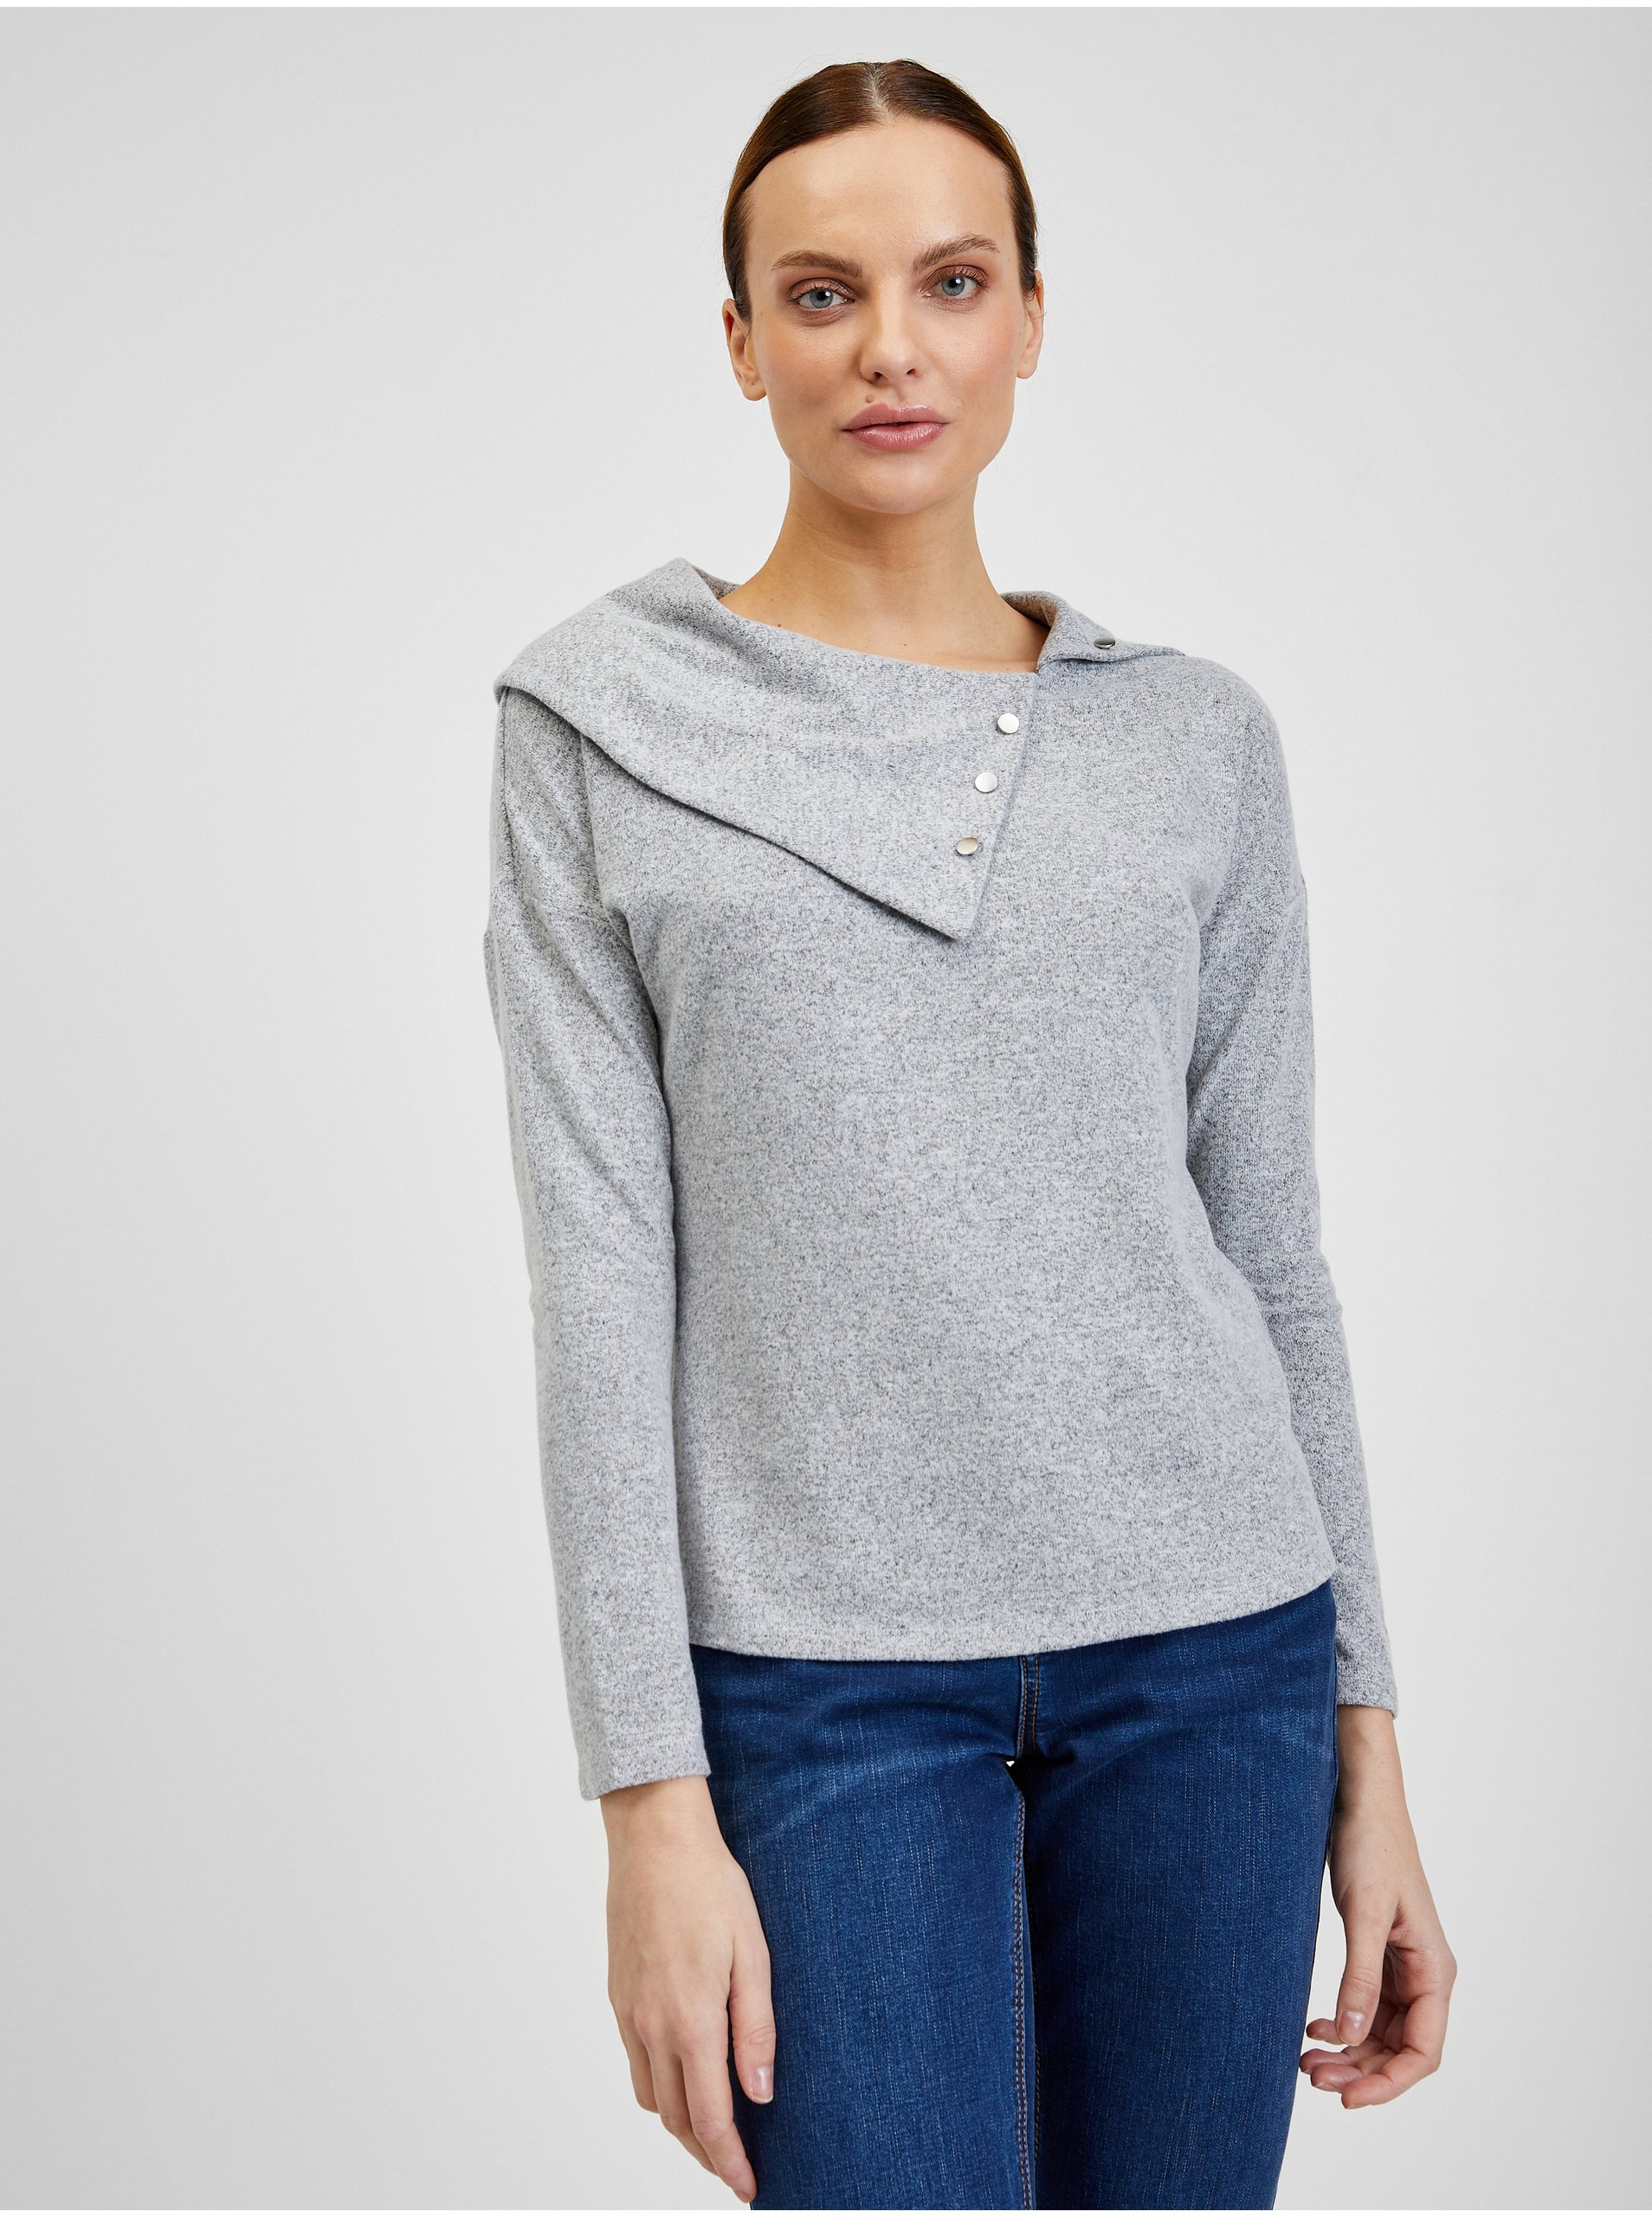 E-shop Šedé dámské tričko s ozdobnými detaily ORSAY